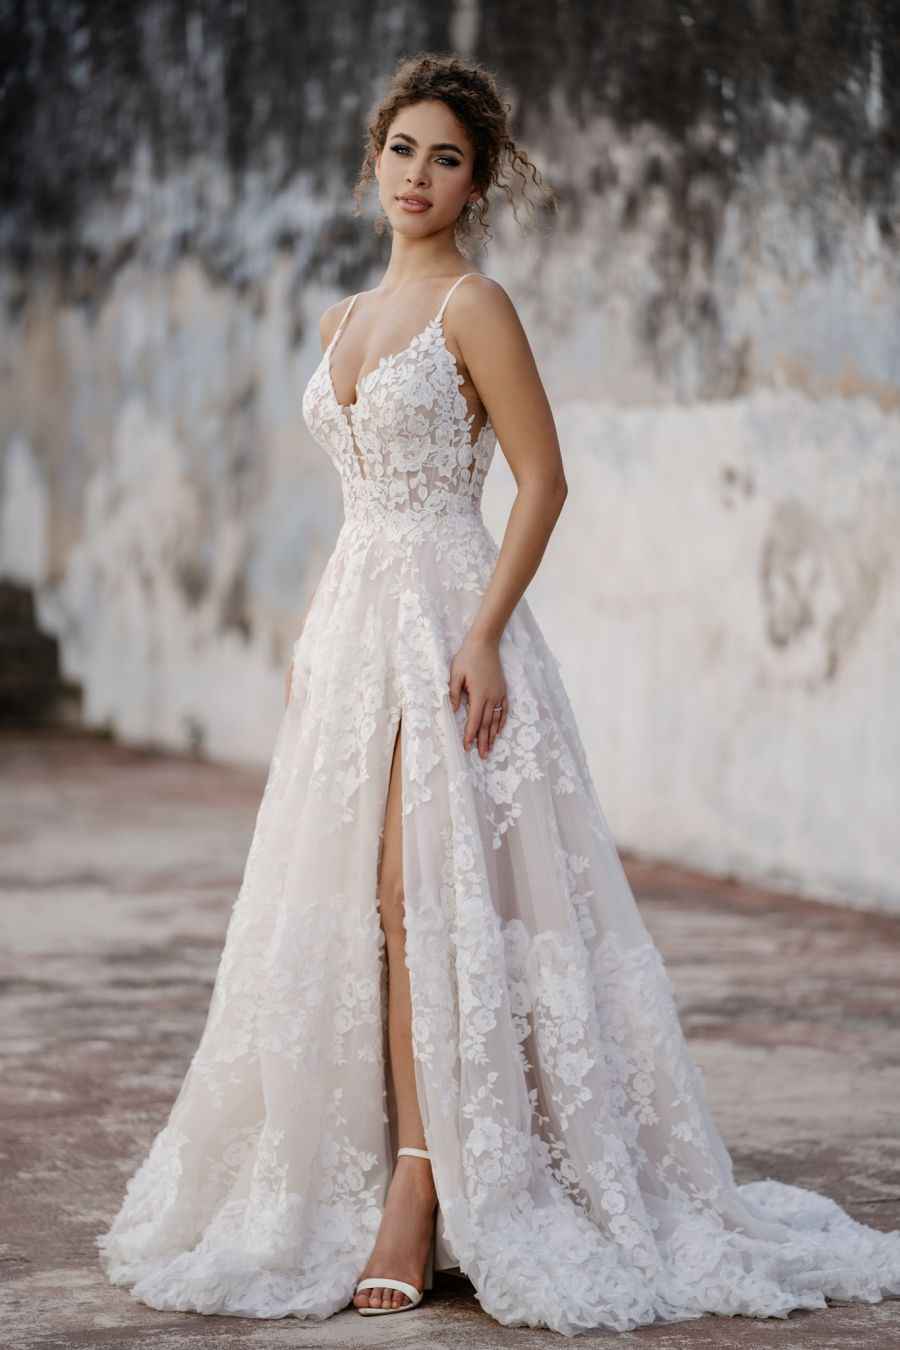 Boho Wedding Dresses - Michigan Bridal Boutique - The White Dress